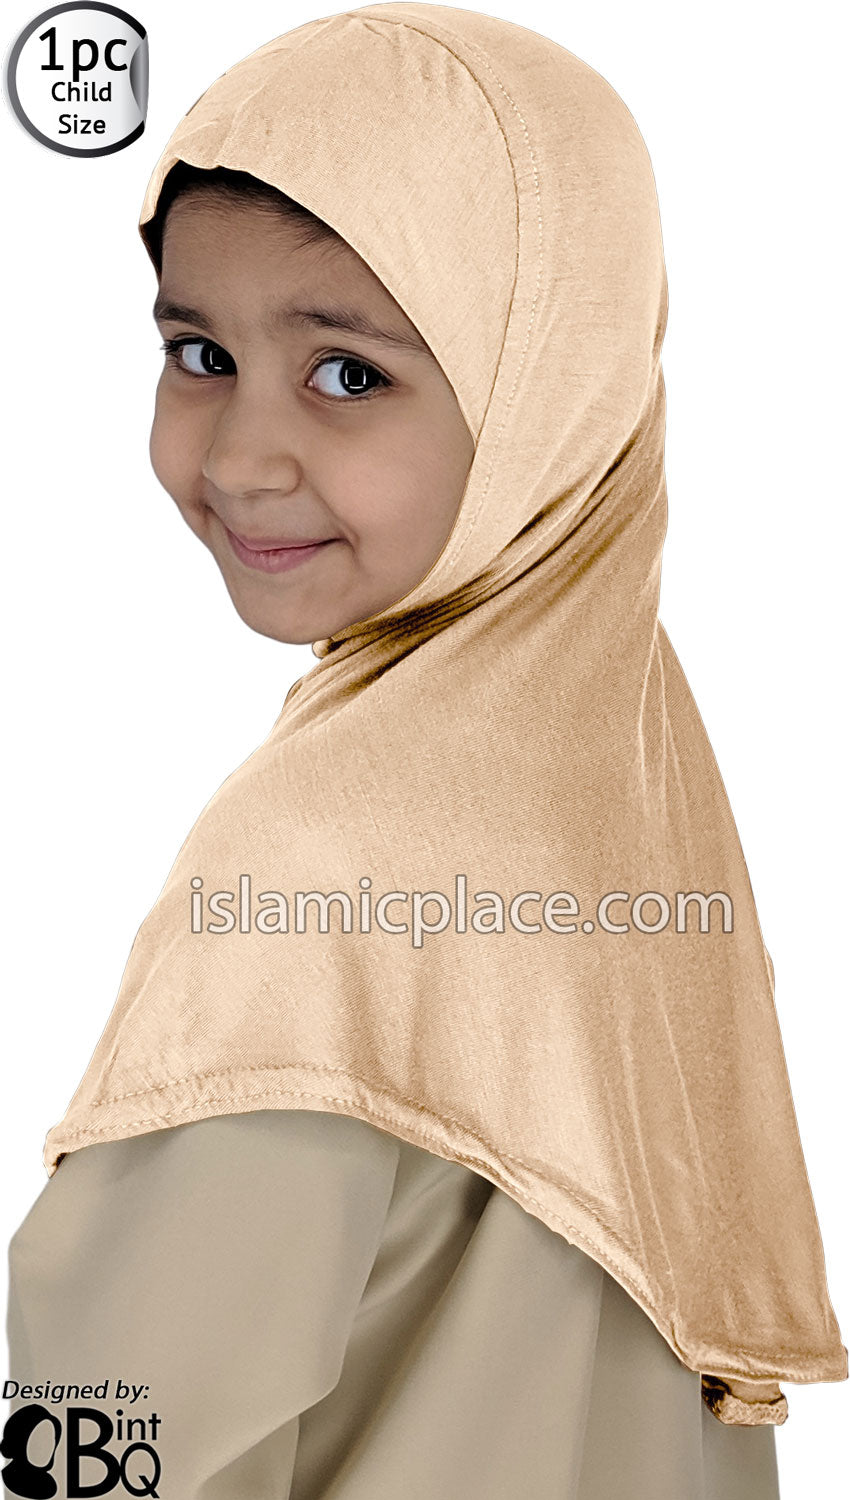 Oatmeal - Plain Girl size (1-piece) Hijab Al-Amira